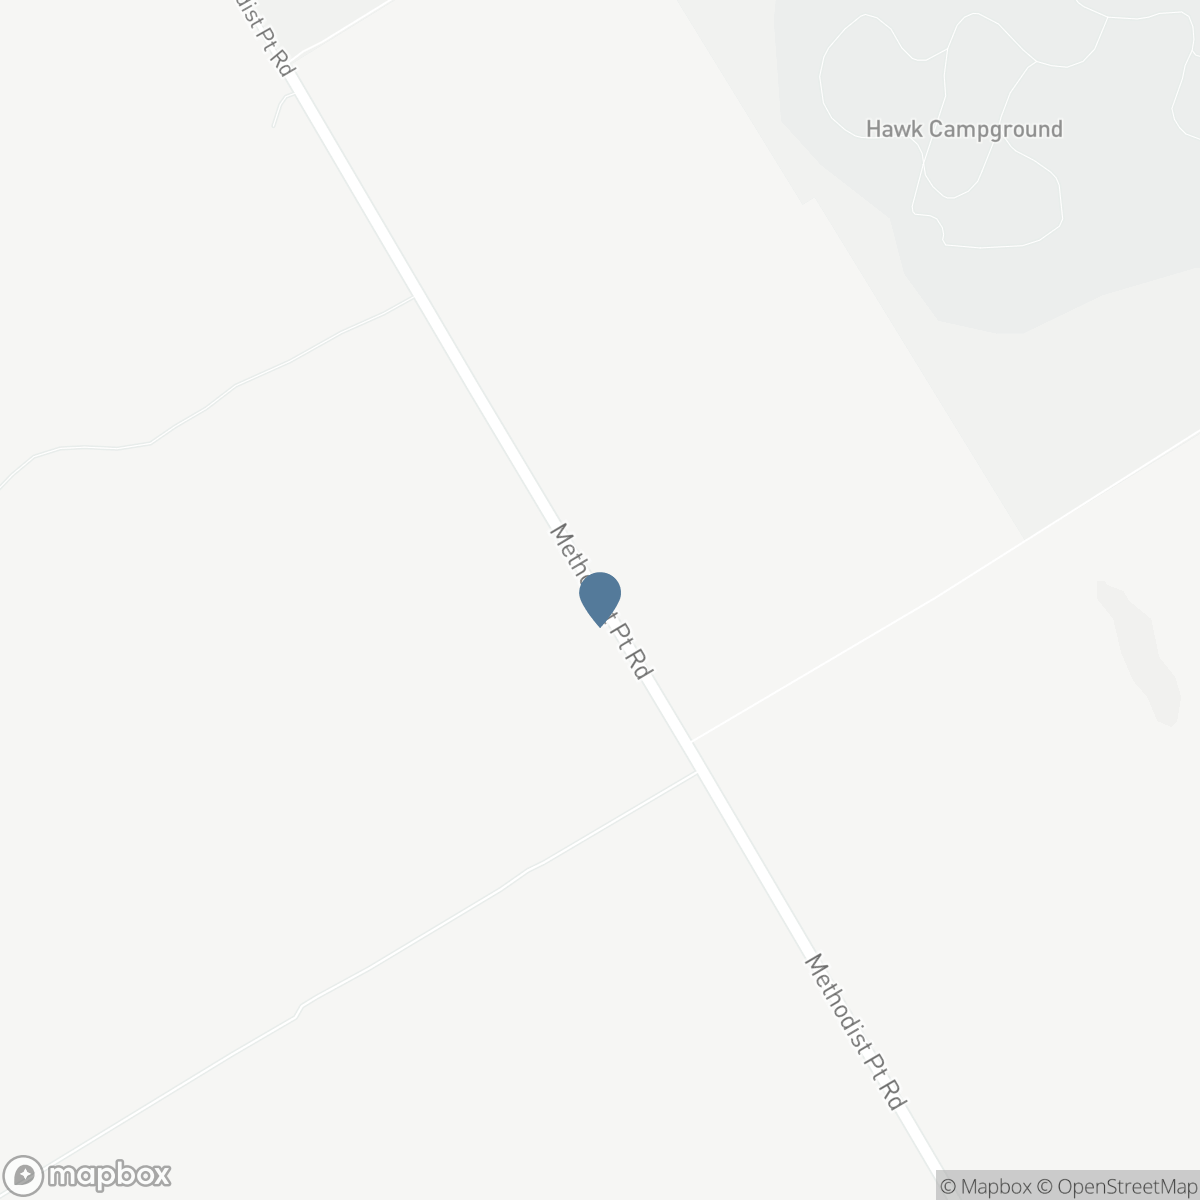 1830 METHODIST POINT RD, Tiny, Ontario L0L 2J0